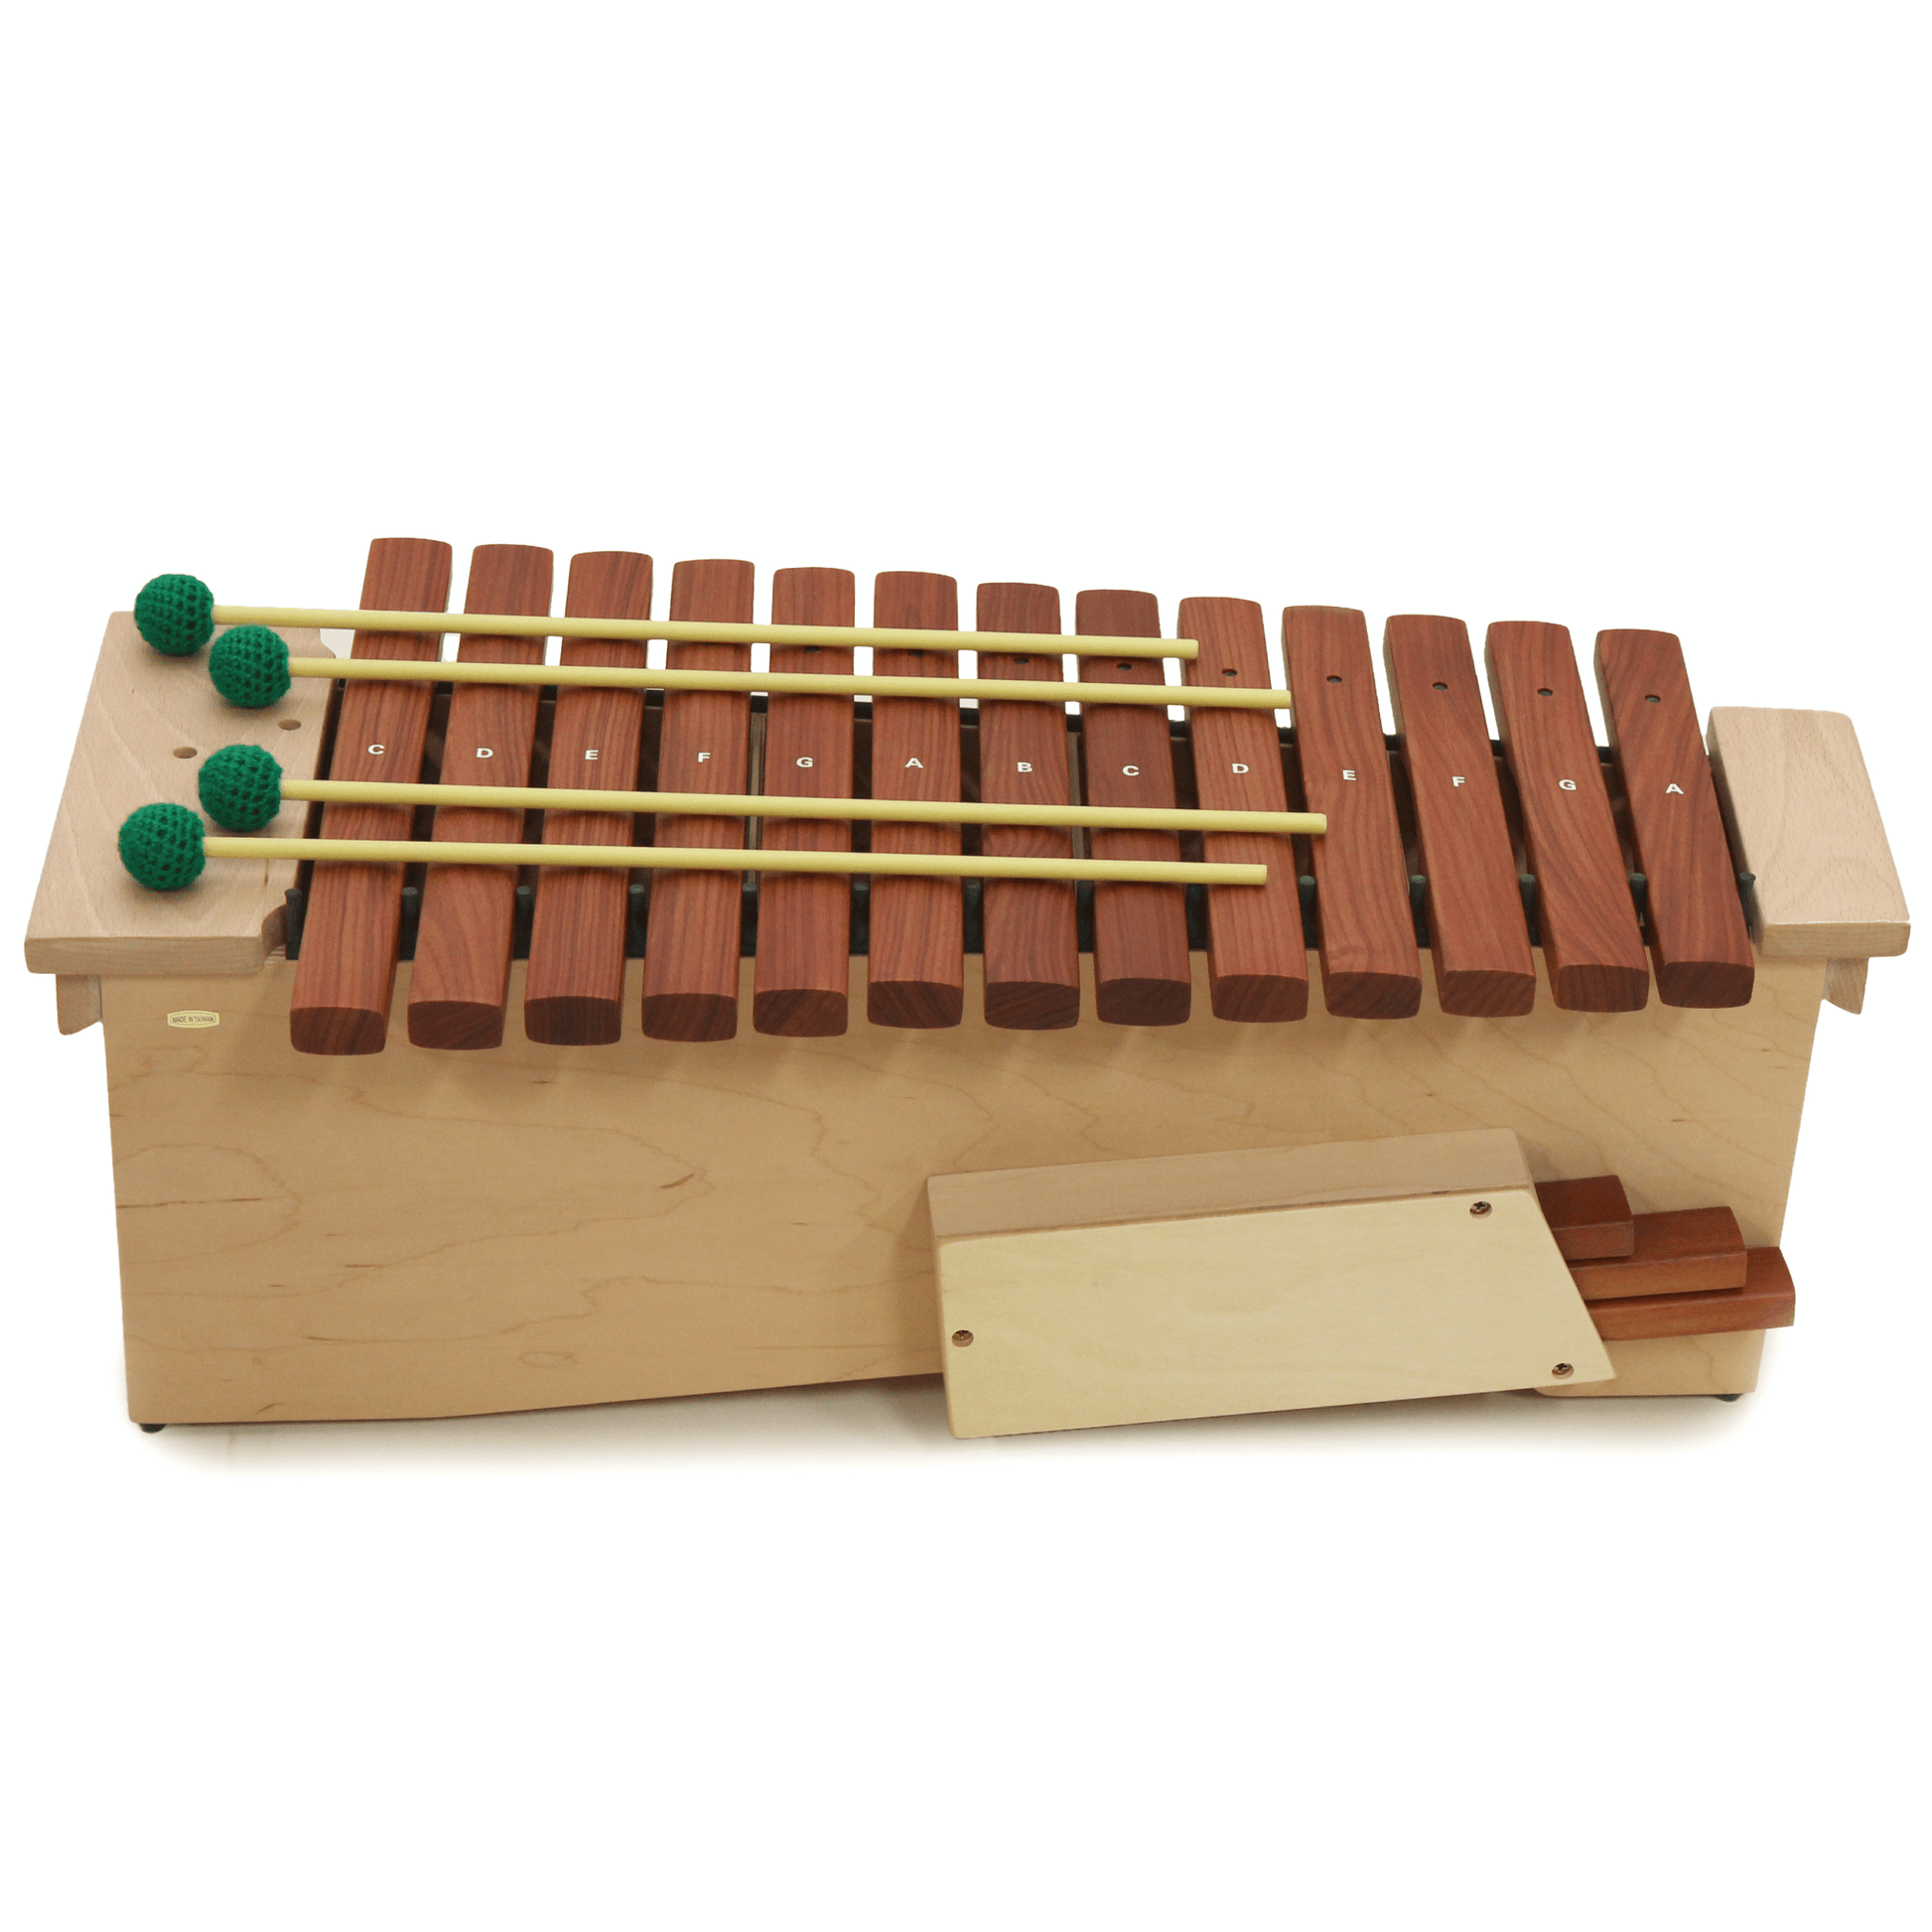 Musico, mon premier xylophone en bois - Selecta